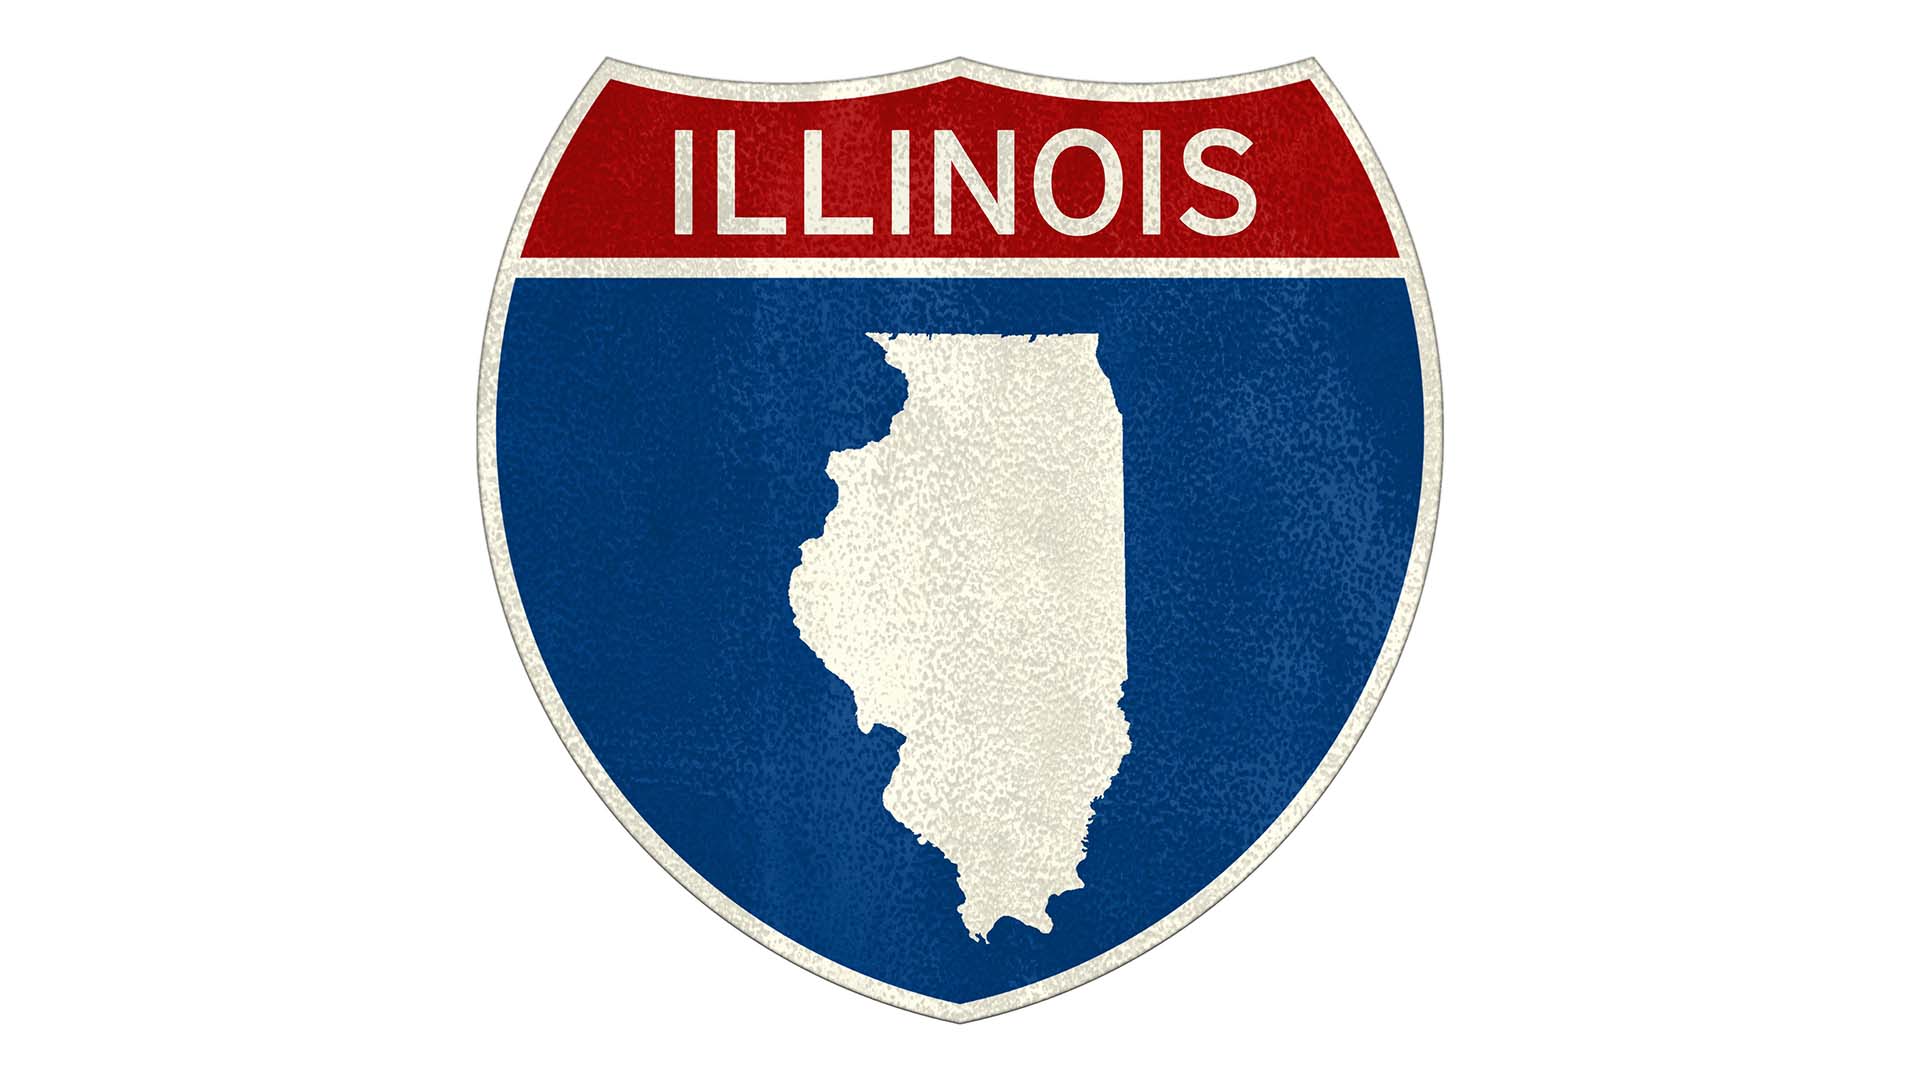 Illinois state roadside sign